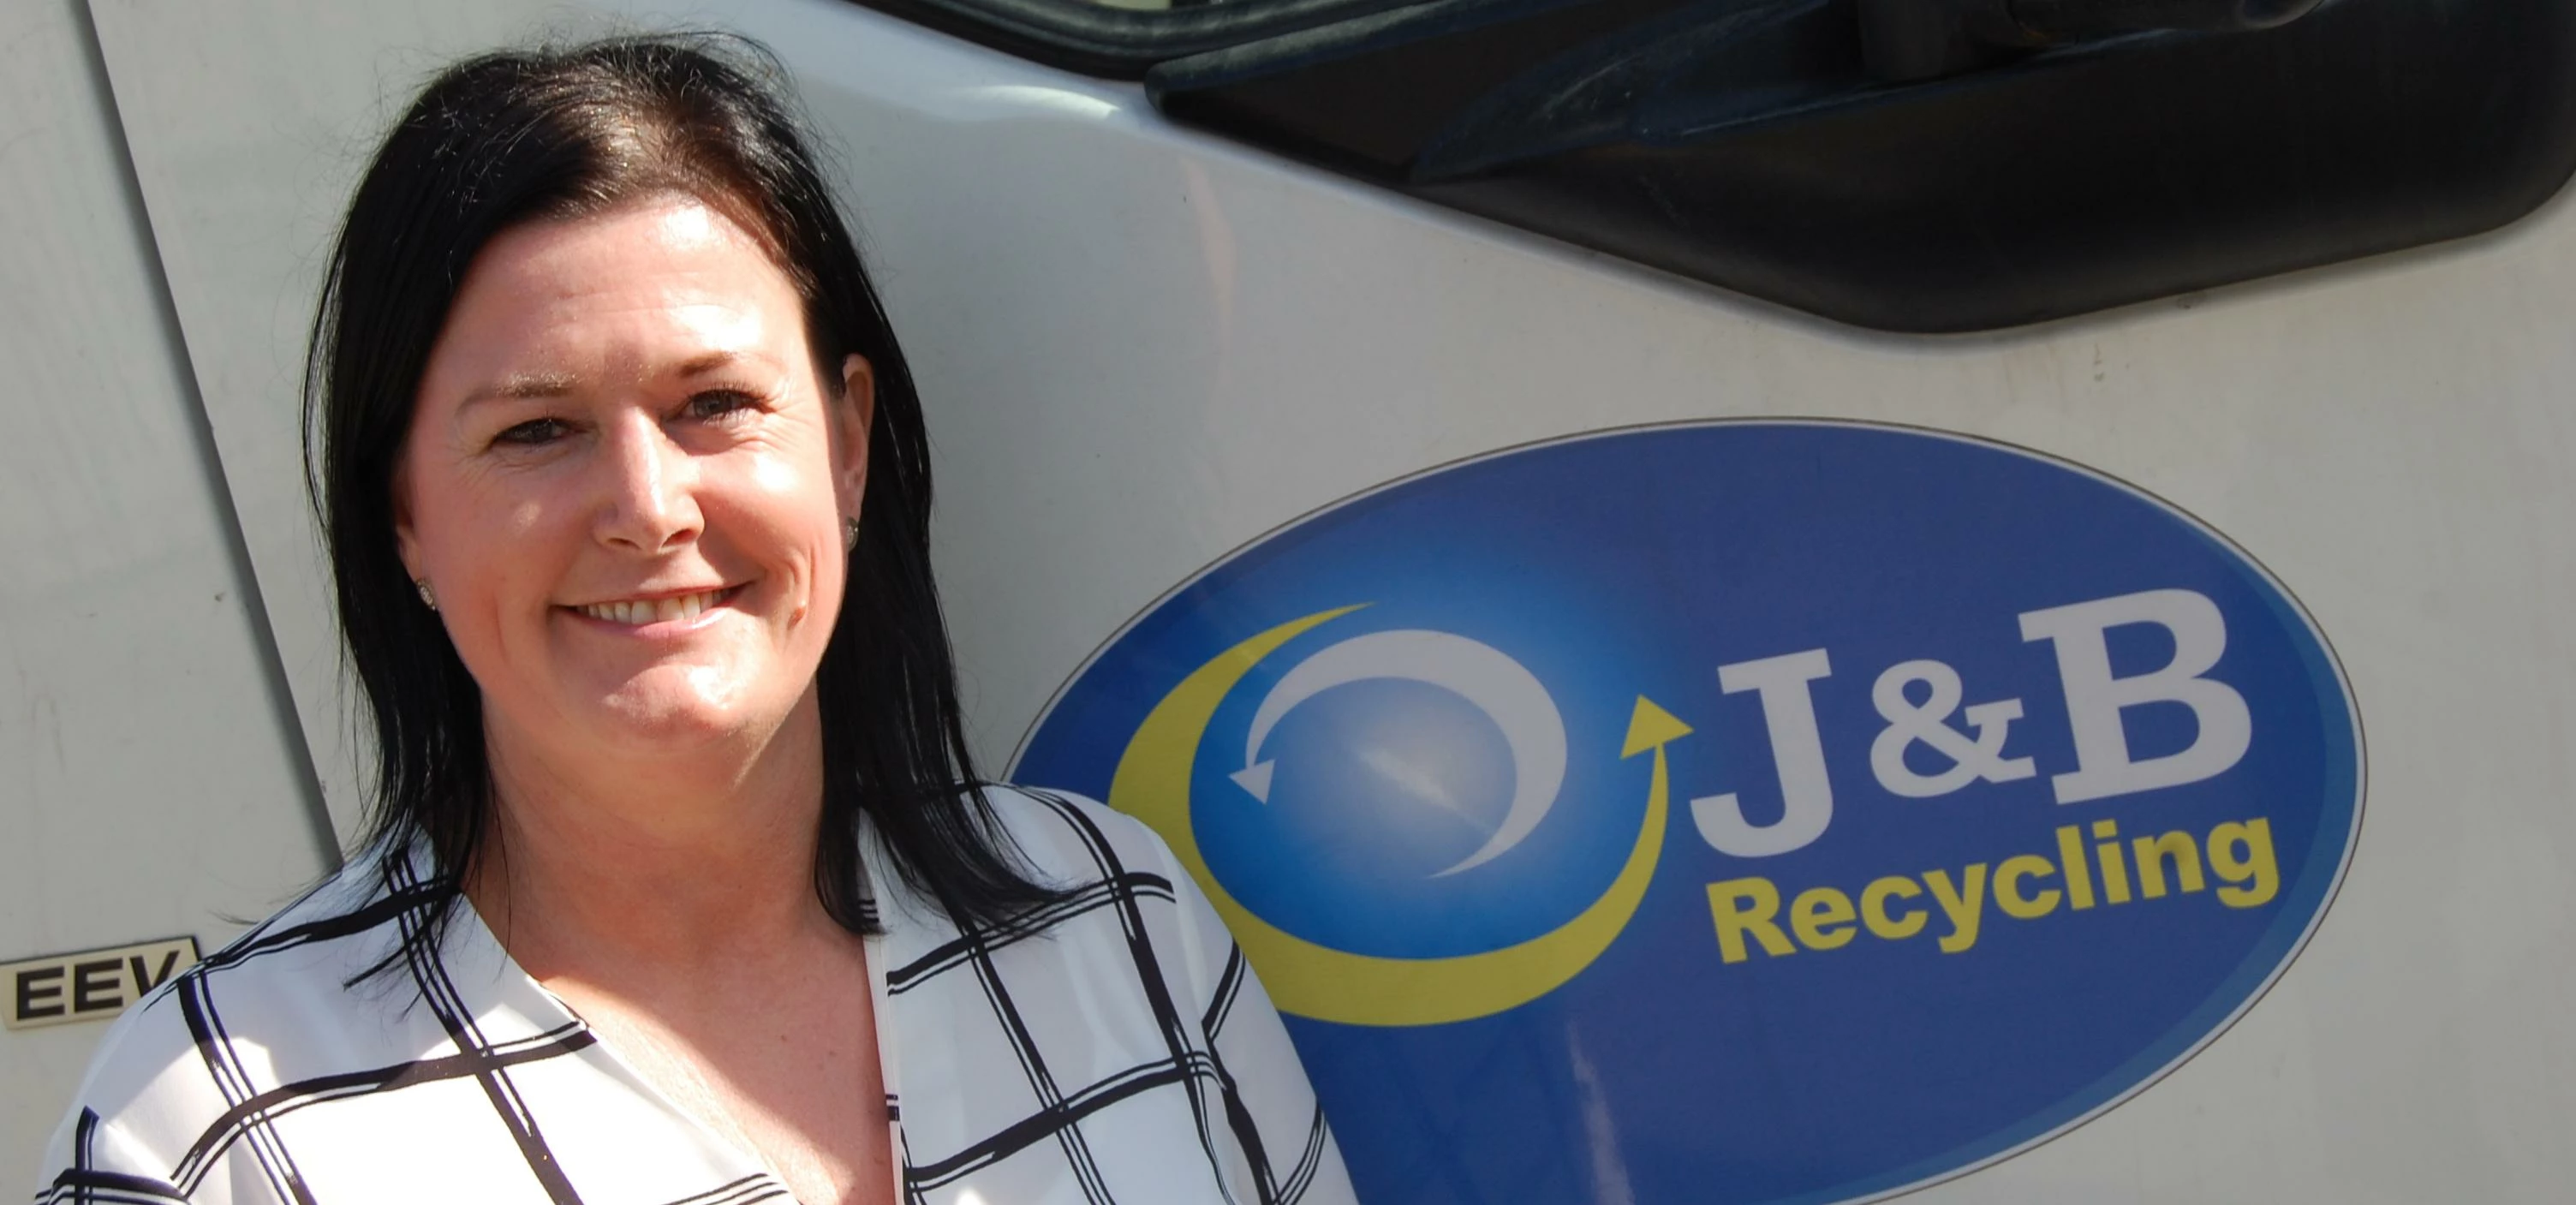 Vikki jackson-Smith, Managing Director at J&B Recycling